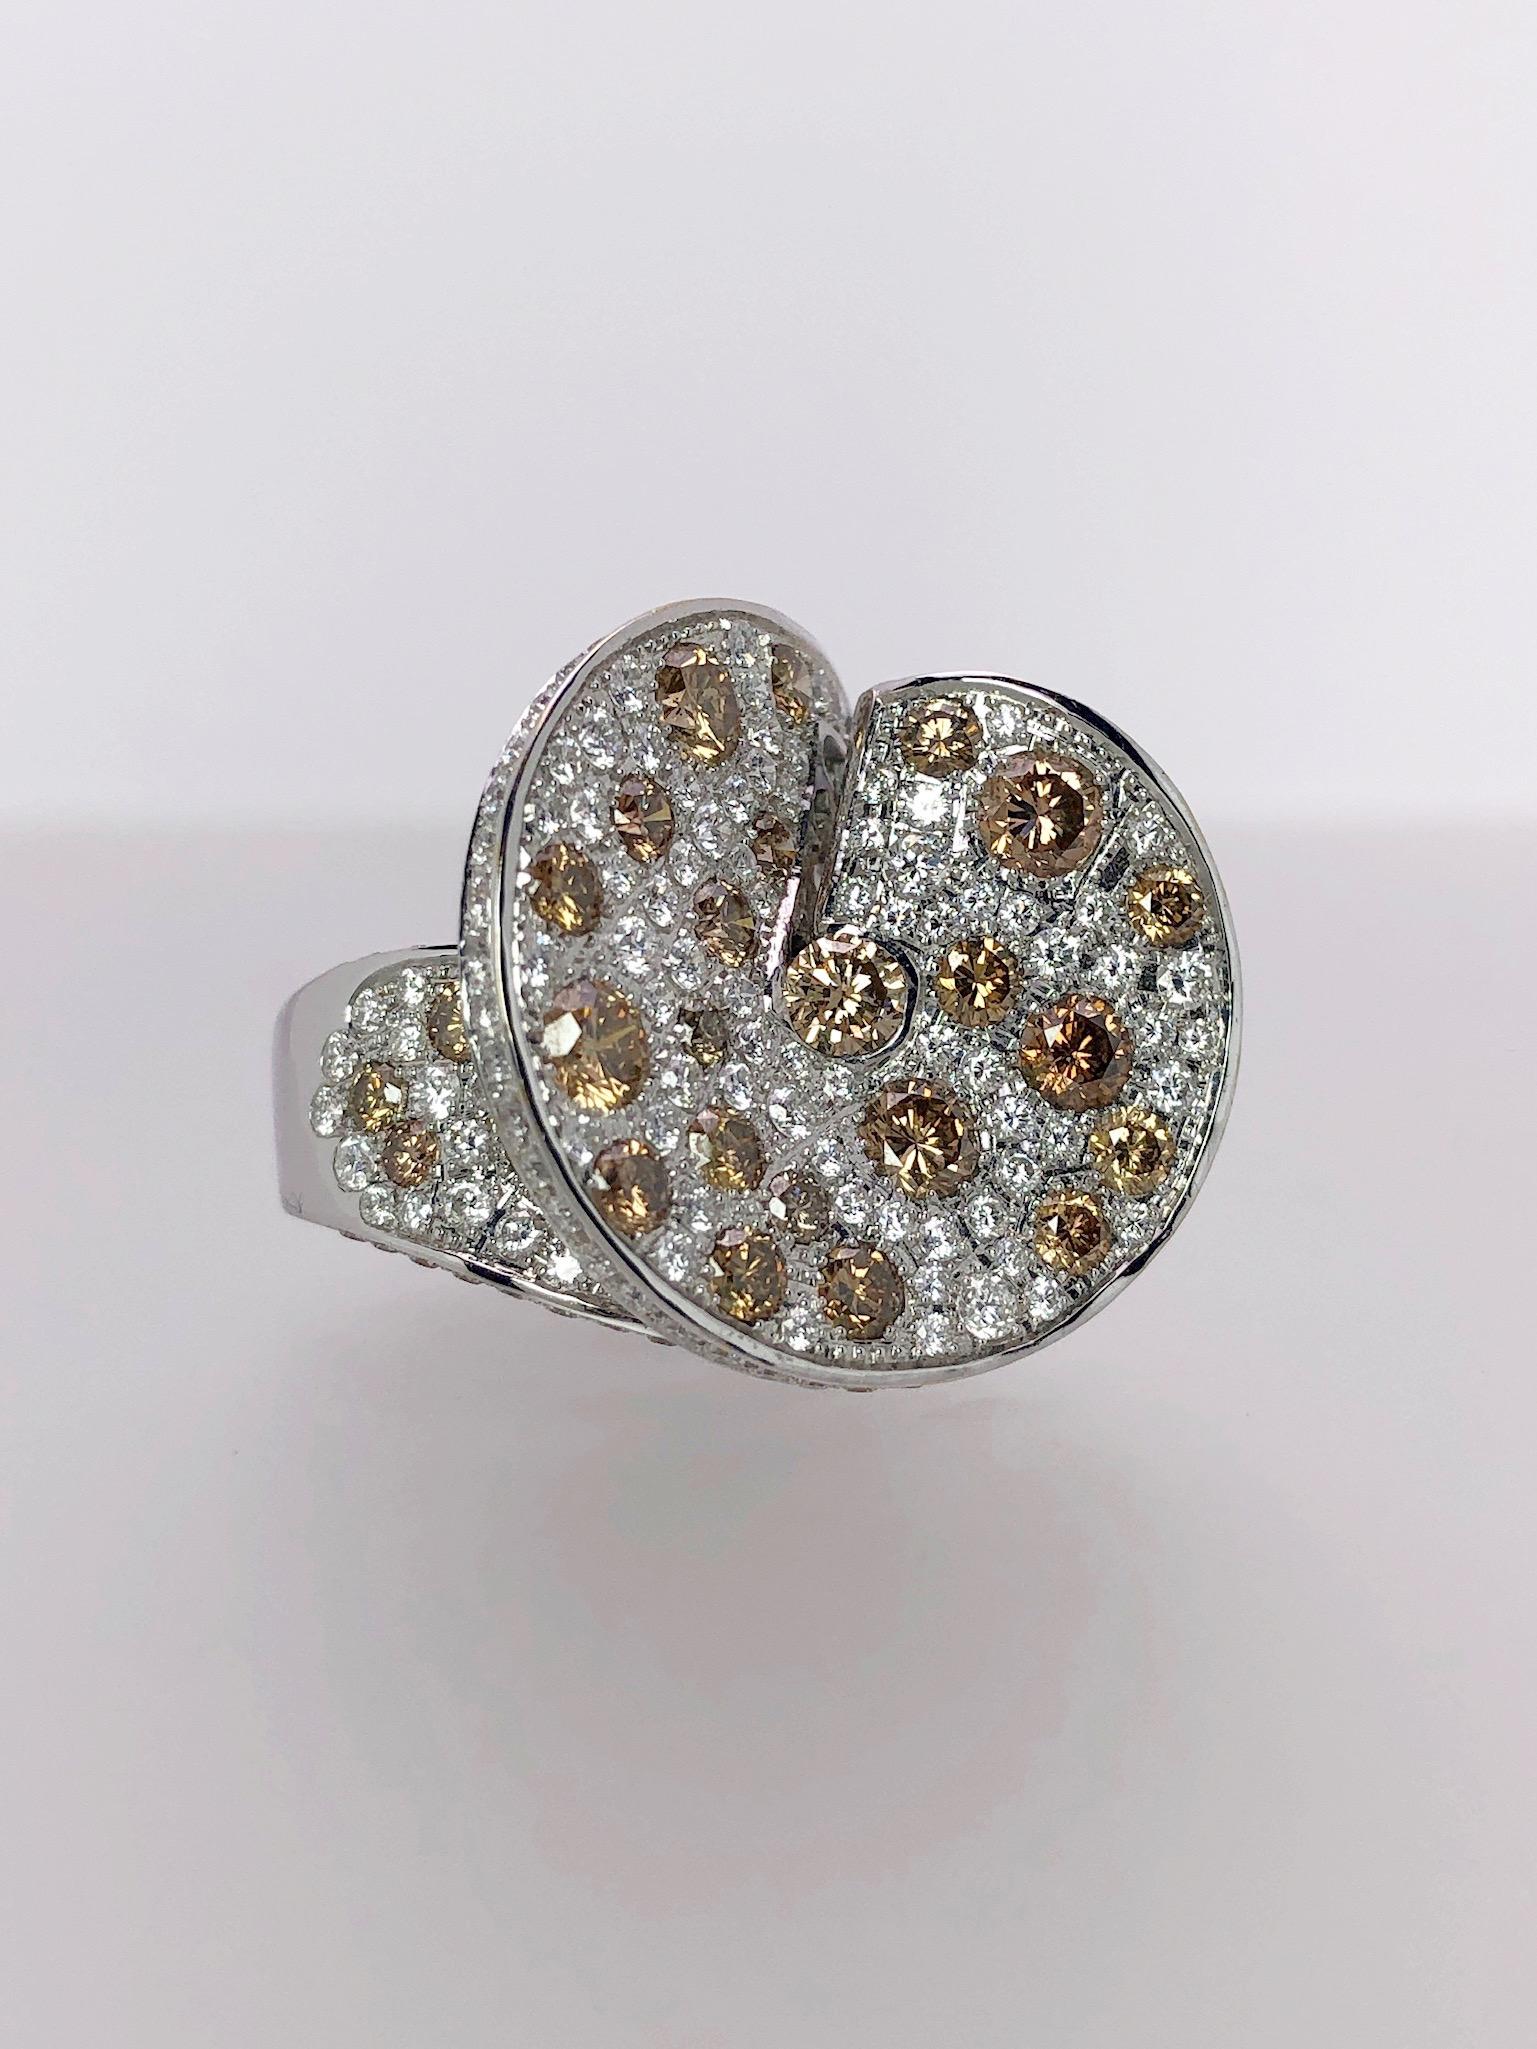 18 Karat Gold Swirl Ring with 3.90 Carat Fancy Brown & 3.20 Carat White Diamonds For Sale 4